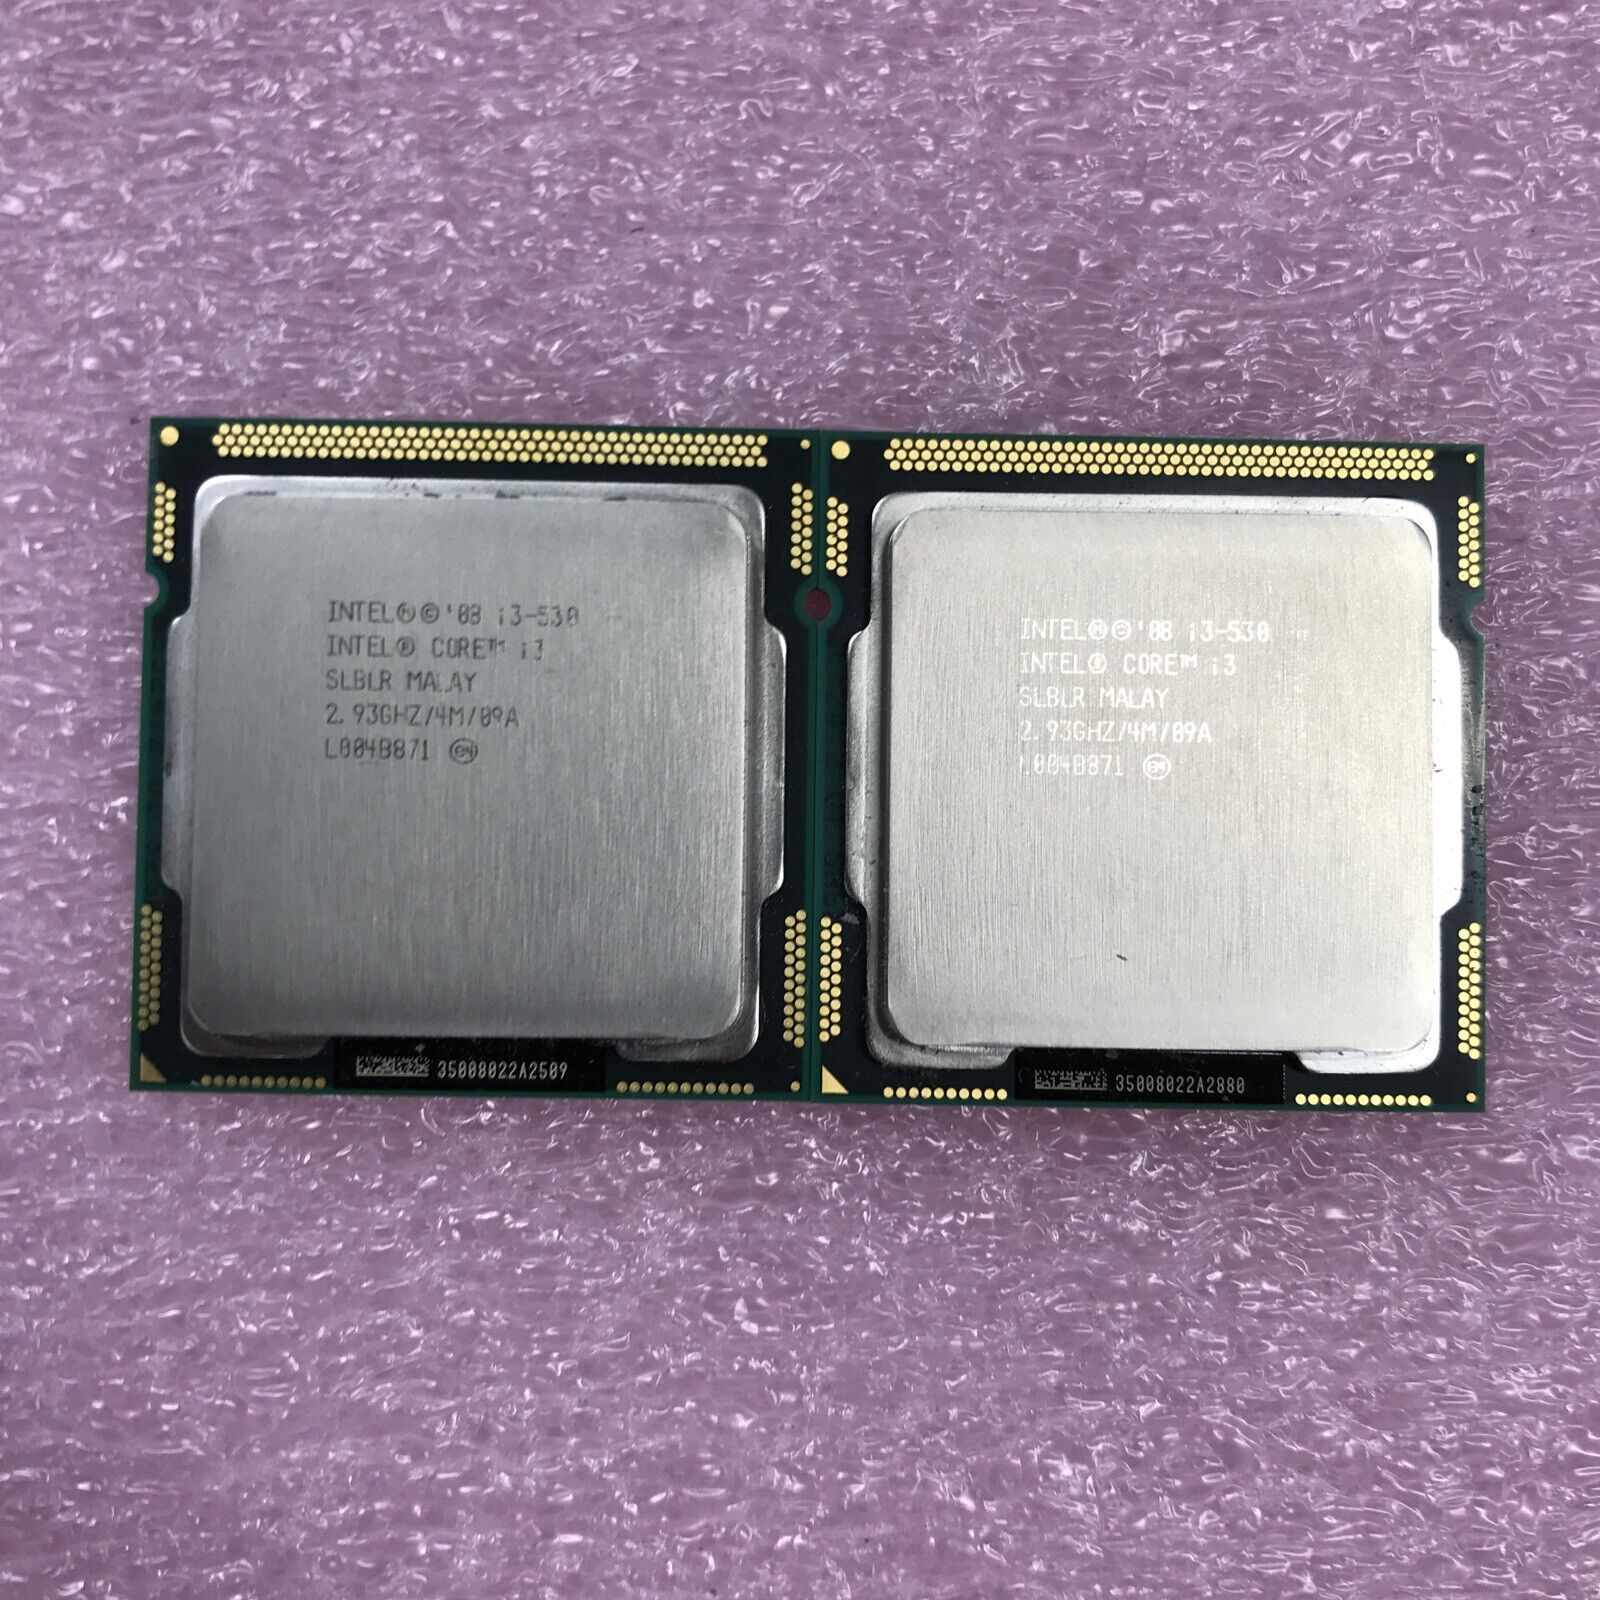 (Lot of 2) Intel Core i3-530 SLBLR MALAY 2.93GHz CPU Processor